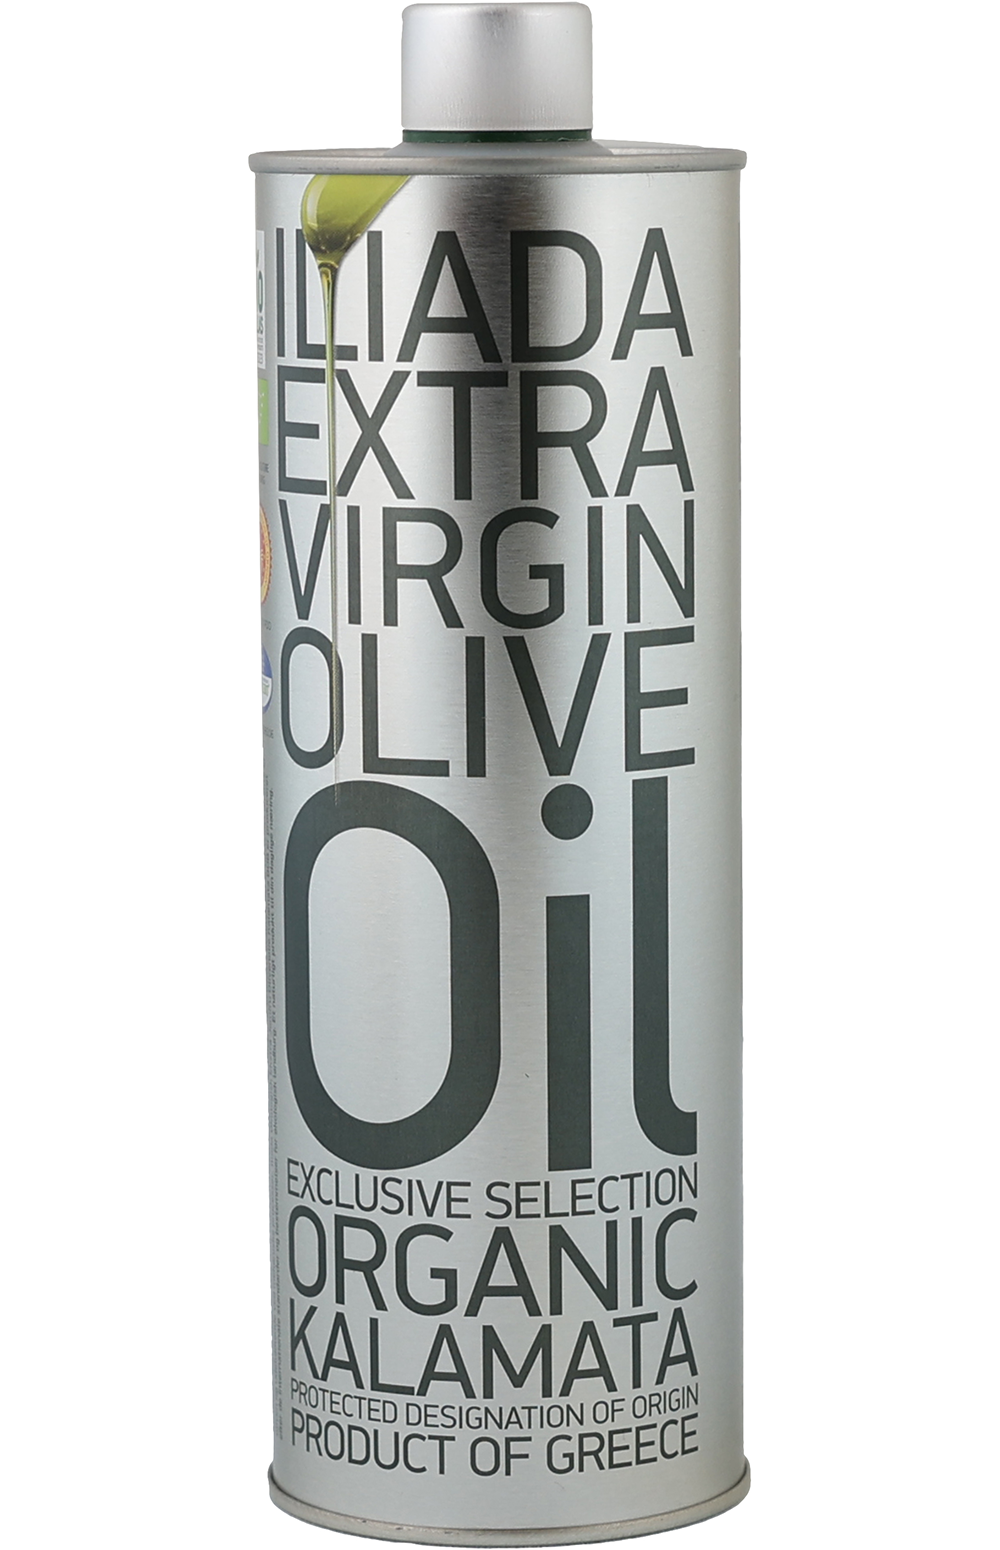 Iliada Platinum Organic Kalamata PDO Extra Virgin Olive Oil